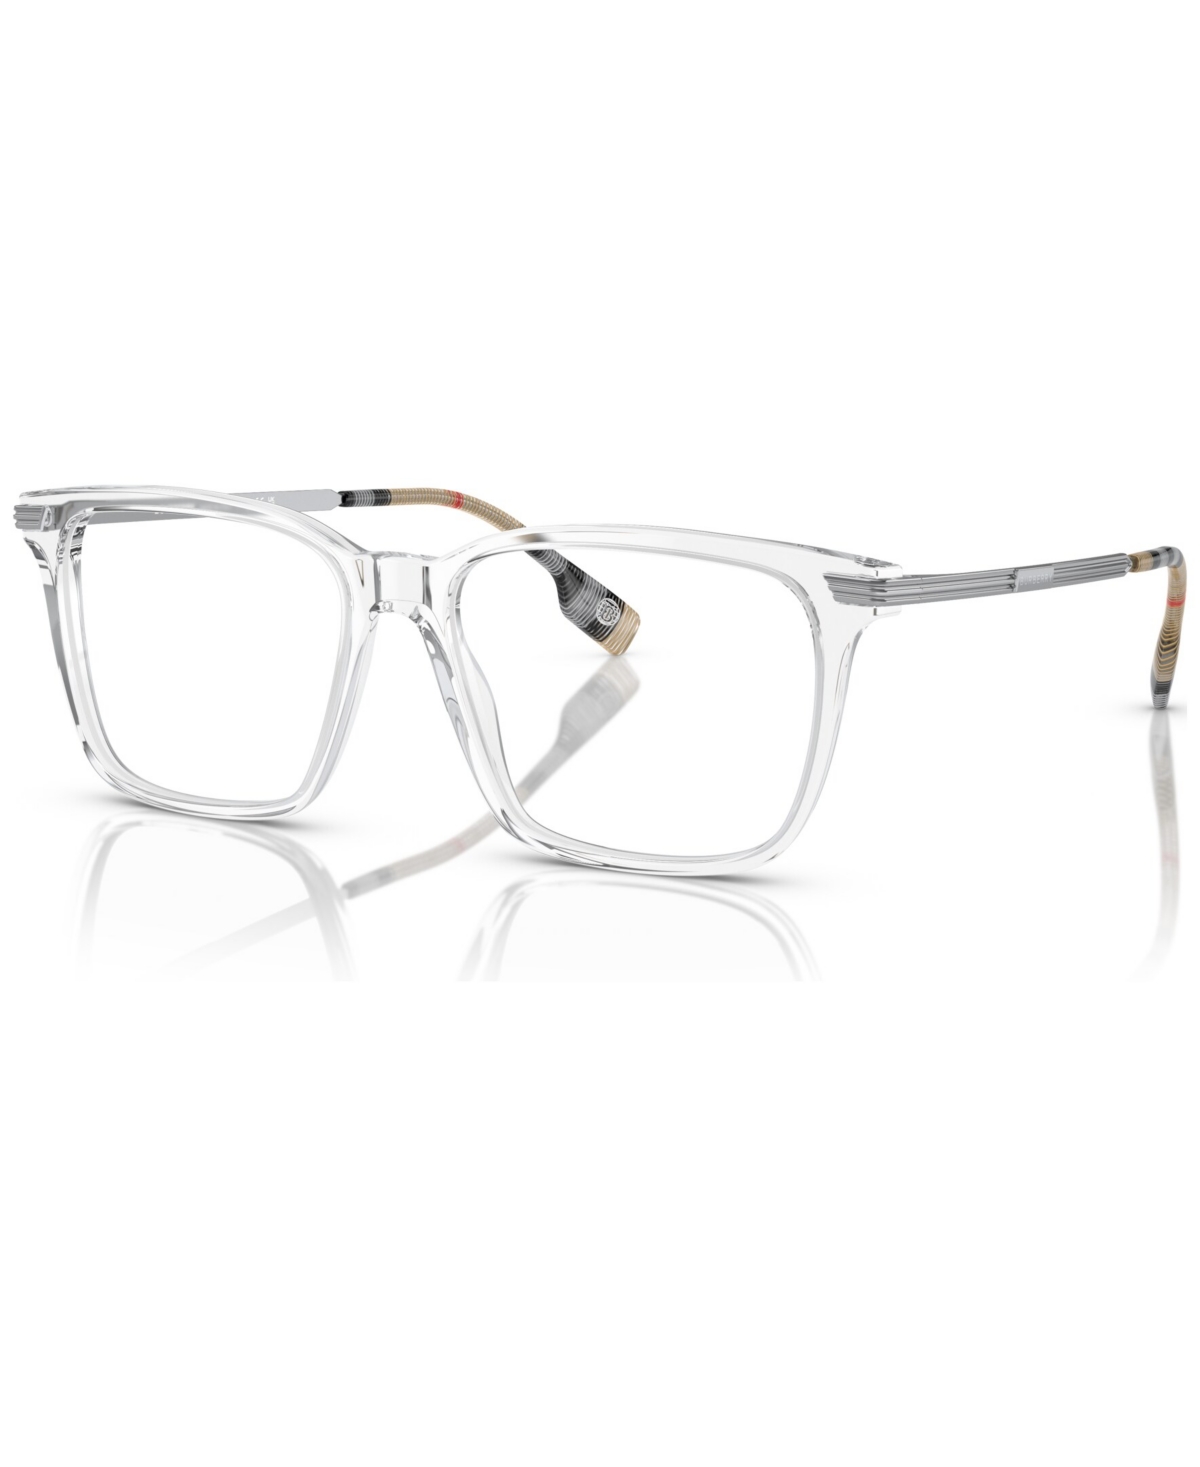 Men's Square Eyeglasses, BE2378 53 - Transparent